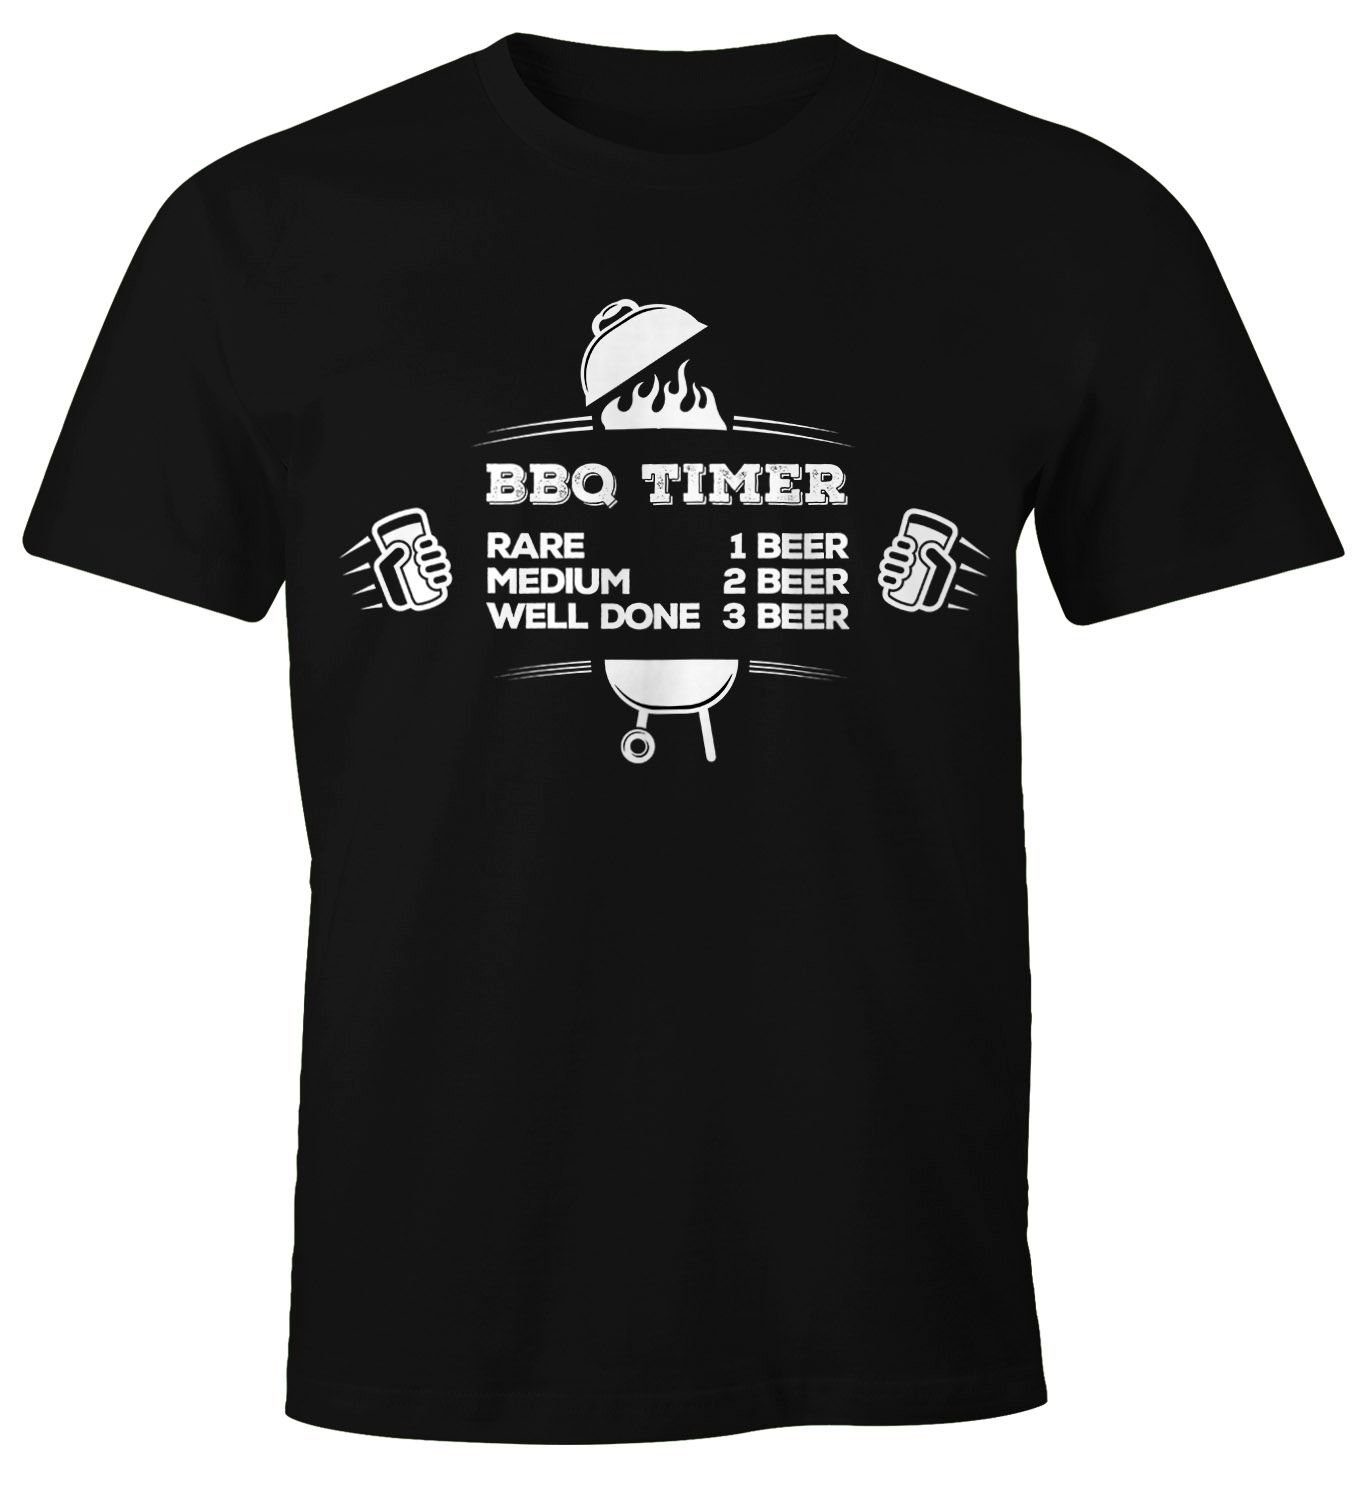 MoonWorks Print-Shirt Herren T-Shirt BBQ Food mit Moonworks® Grillen Tee schwarz Barbecue Print Sommer Fun-Shirt Timer